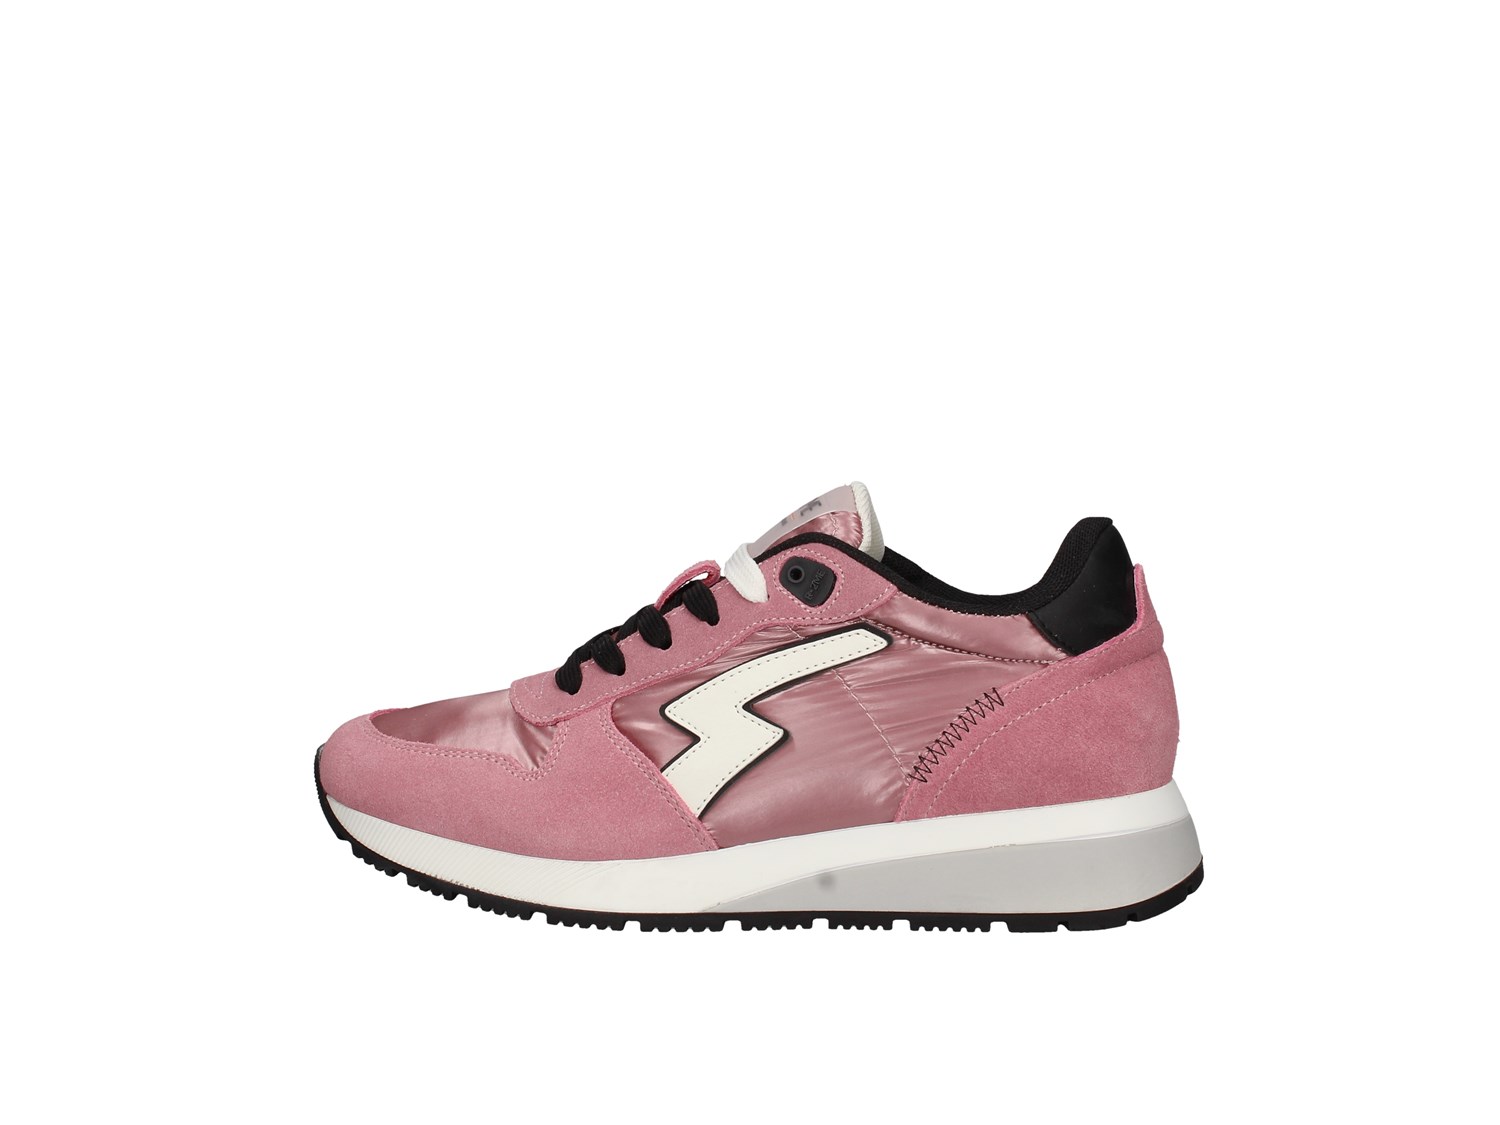 Run2me Racer Pink Shoes Women Sneakers